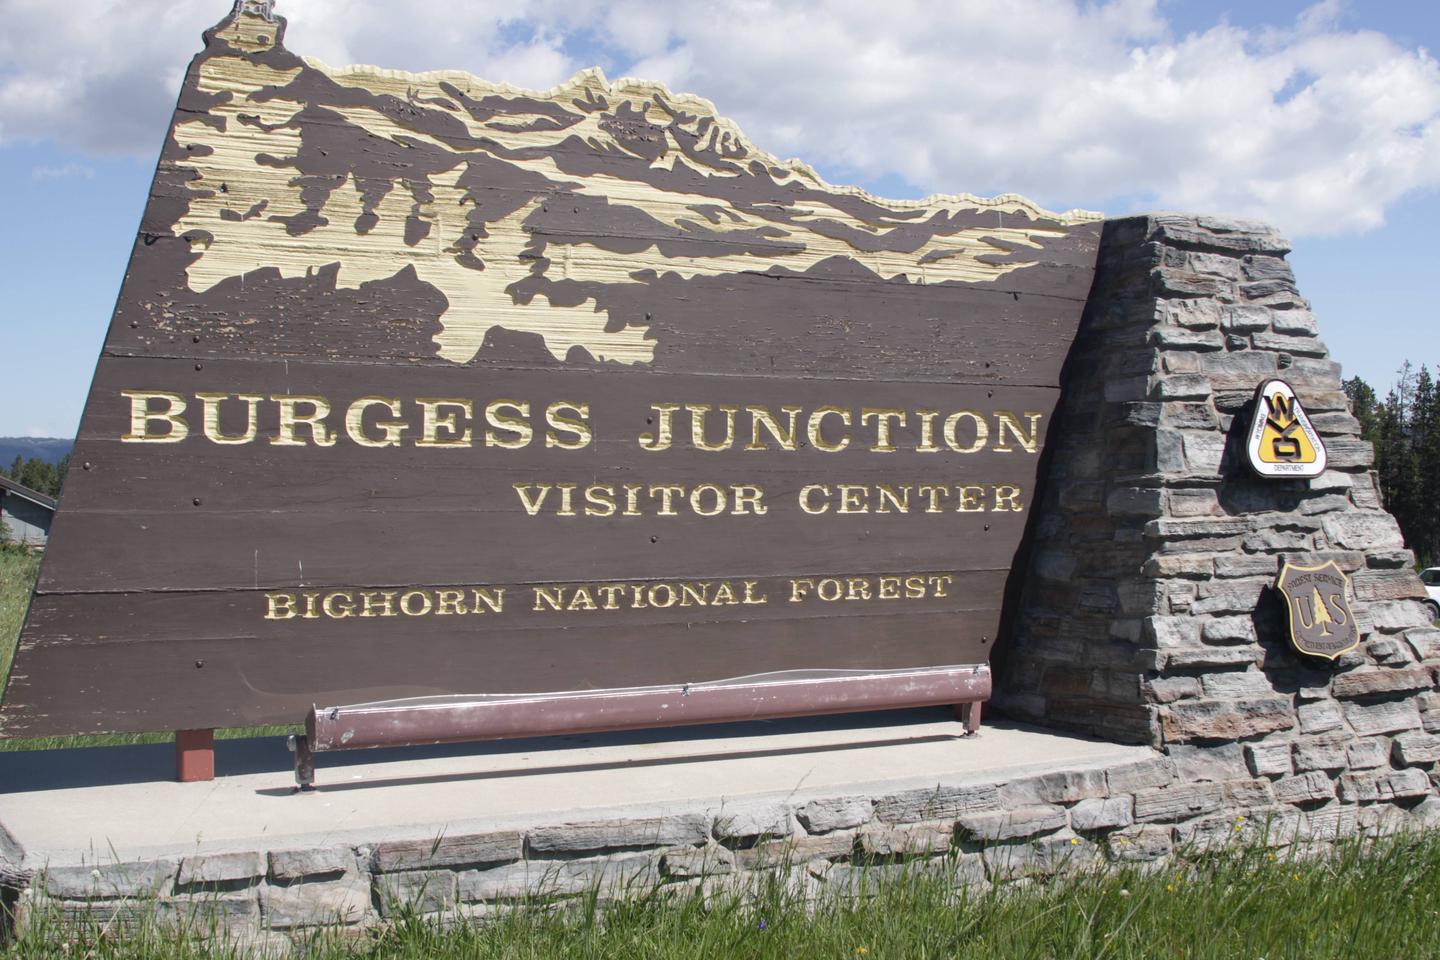 Burgess Junction Visitor Center 1 